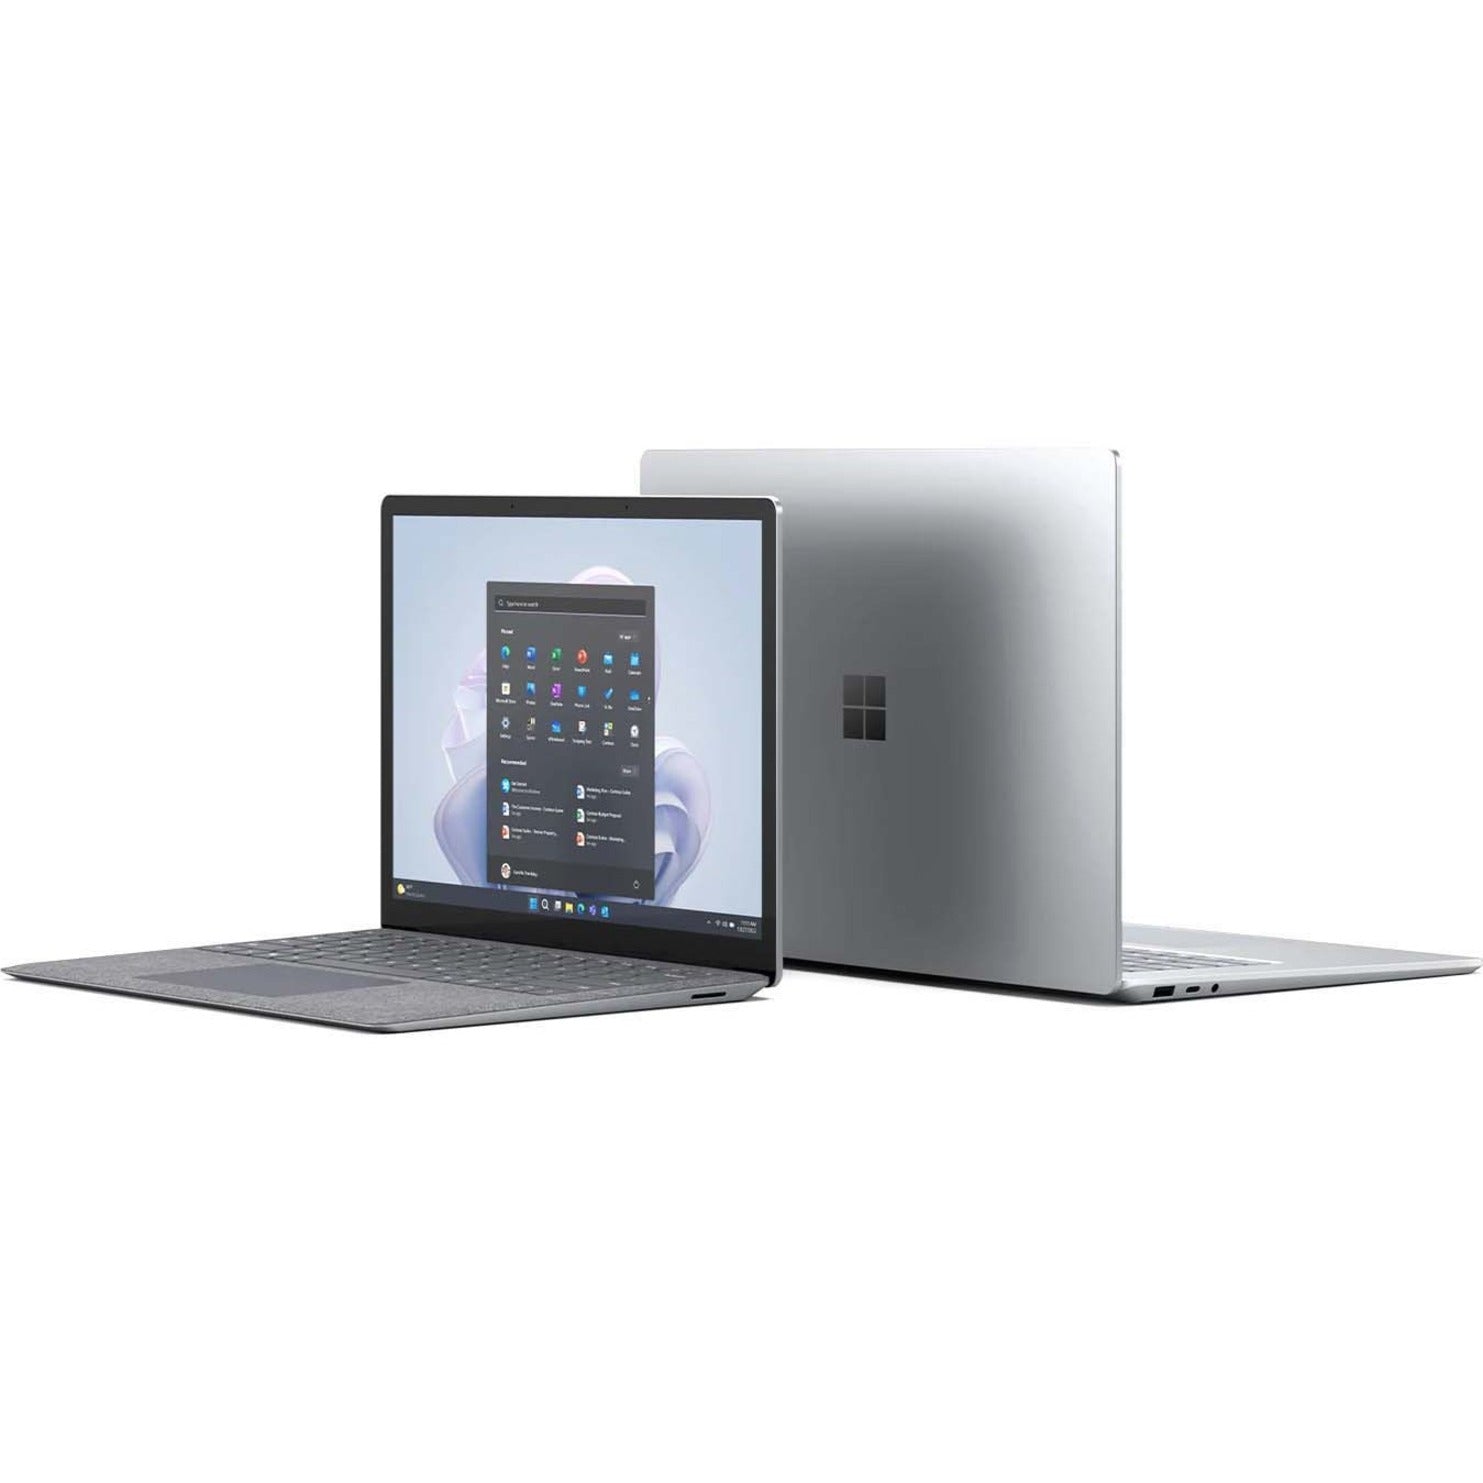 Microsoft RC1-00001 Surface Laptop 5 15" Notebook, Core i7, 8GB RAM, 256GB SSD, Windows 10 Pro